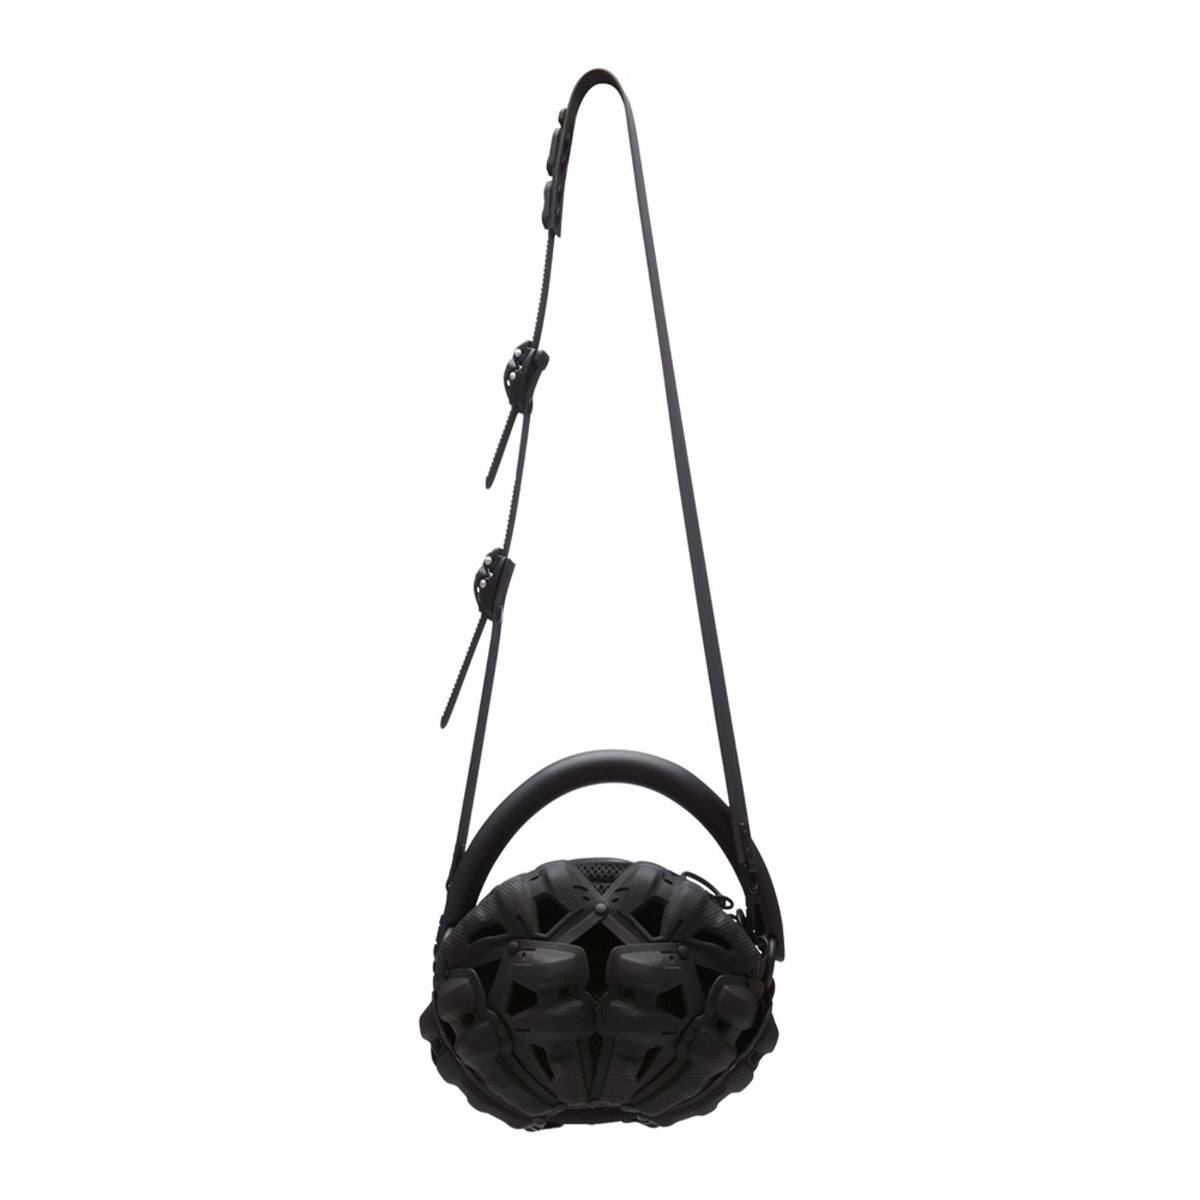 Object Z01 - Ballbrain Bag